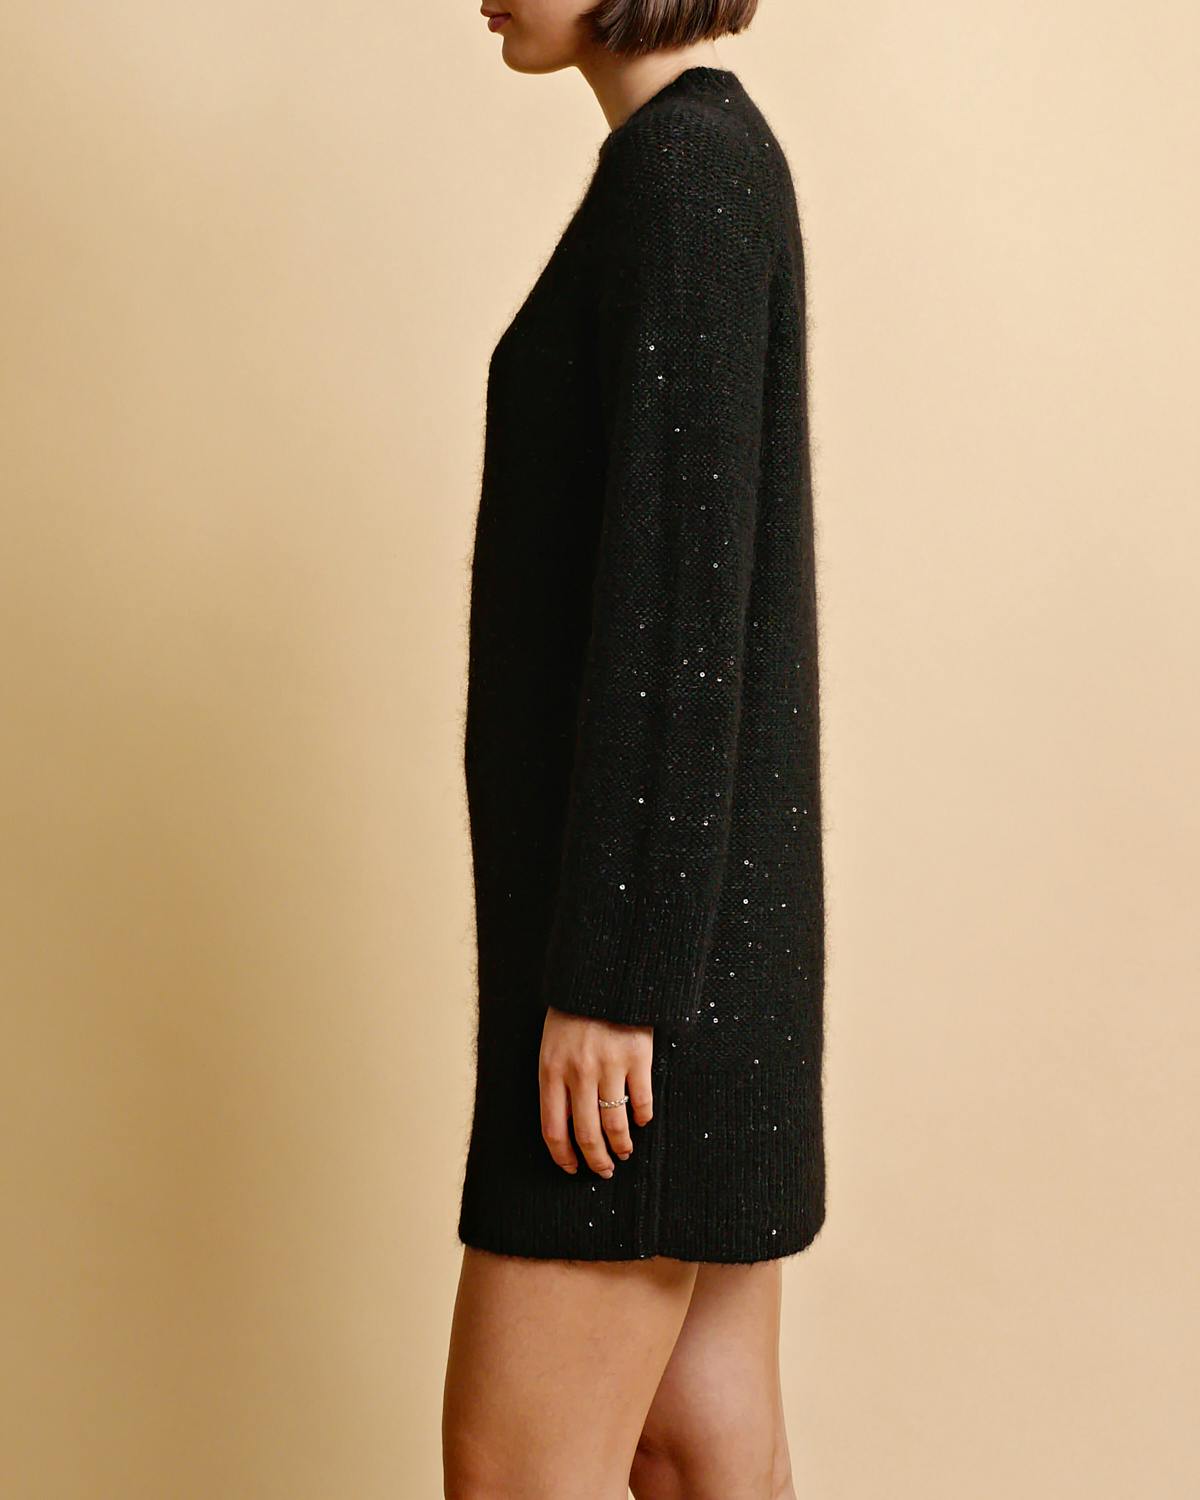 Glitter Knit Dress, Black. Image #6